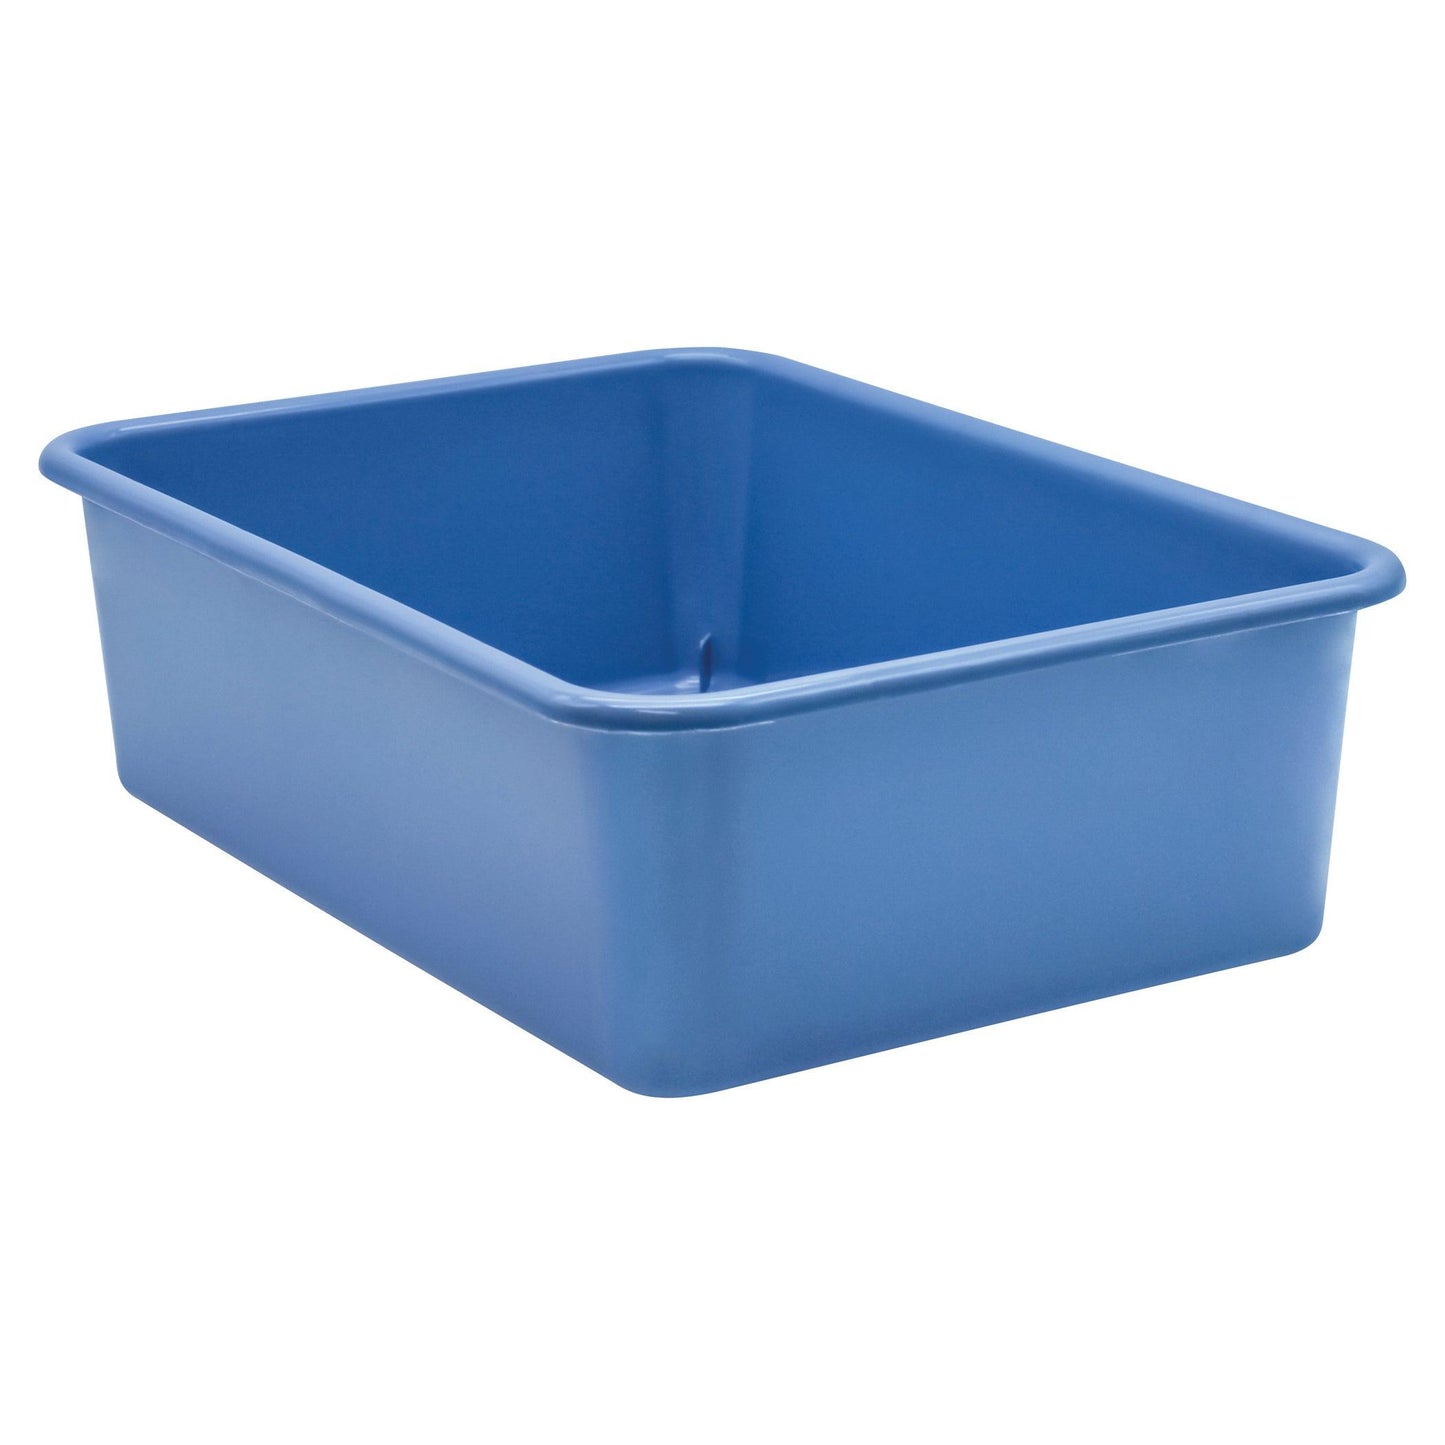 Slate Blue Large Plastic Storage Bin, Pack of 3 - Loomini